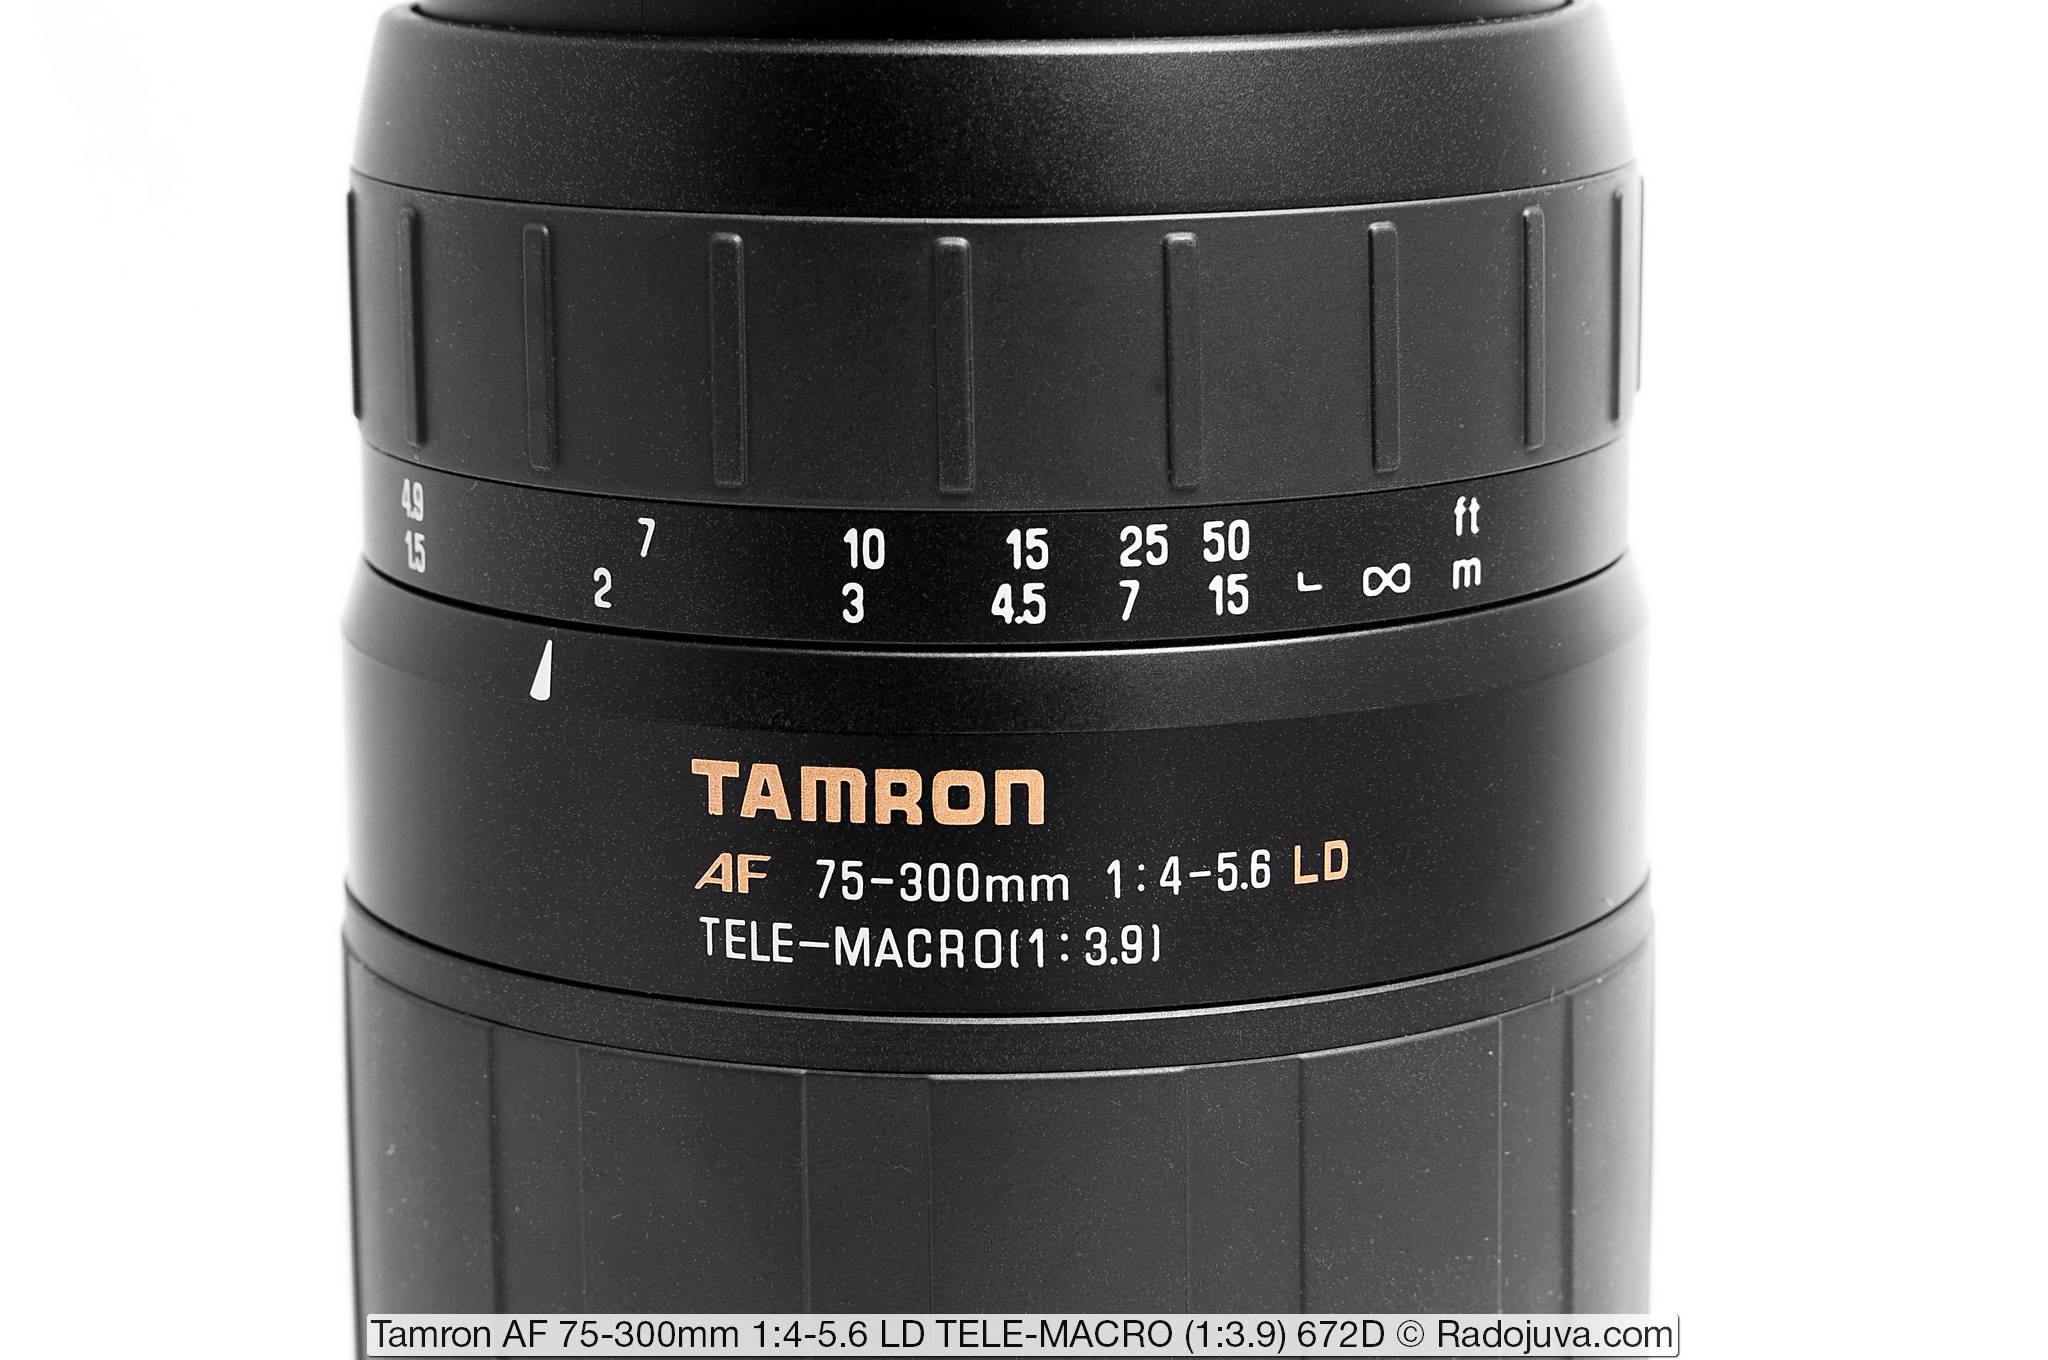 Tamron AF 75-300 mm 1:4-5.6 LD TELE-MACRO (1:3.9) 672D